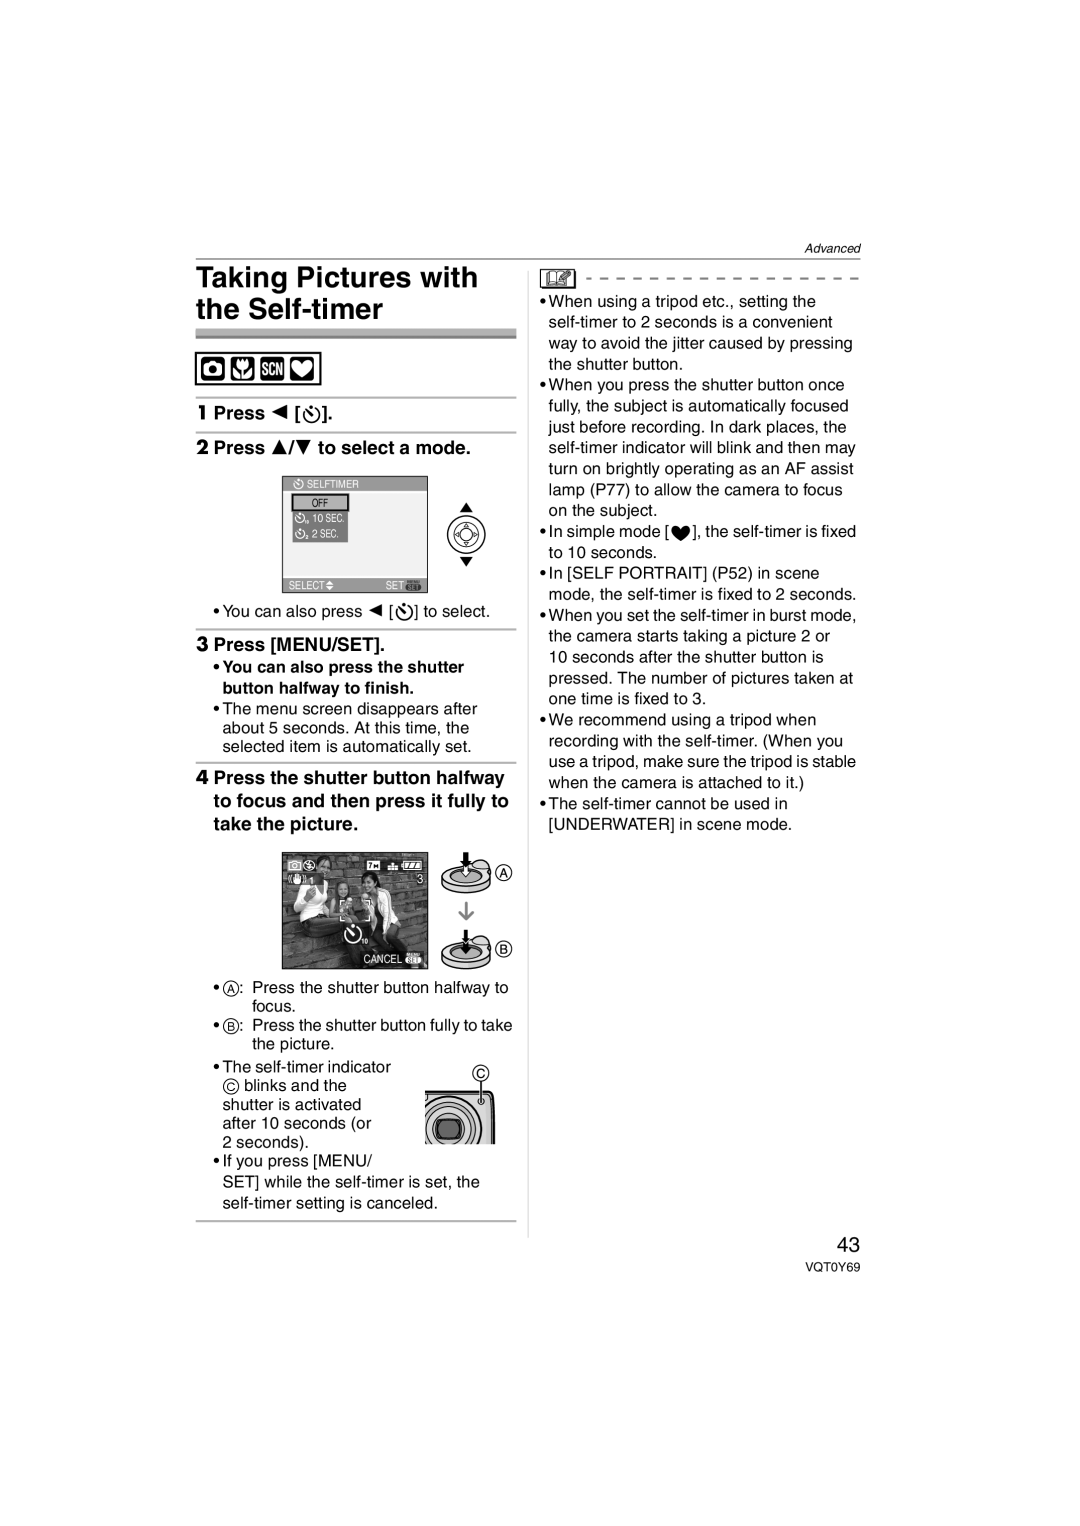 Panasonic DMC-FX3, DMC-FX07 Taking Pictures with the Self-timer, Press 2 Press 3/4 to select a mode, Press MENU/SET 